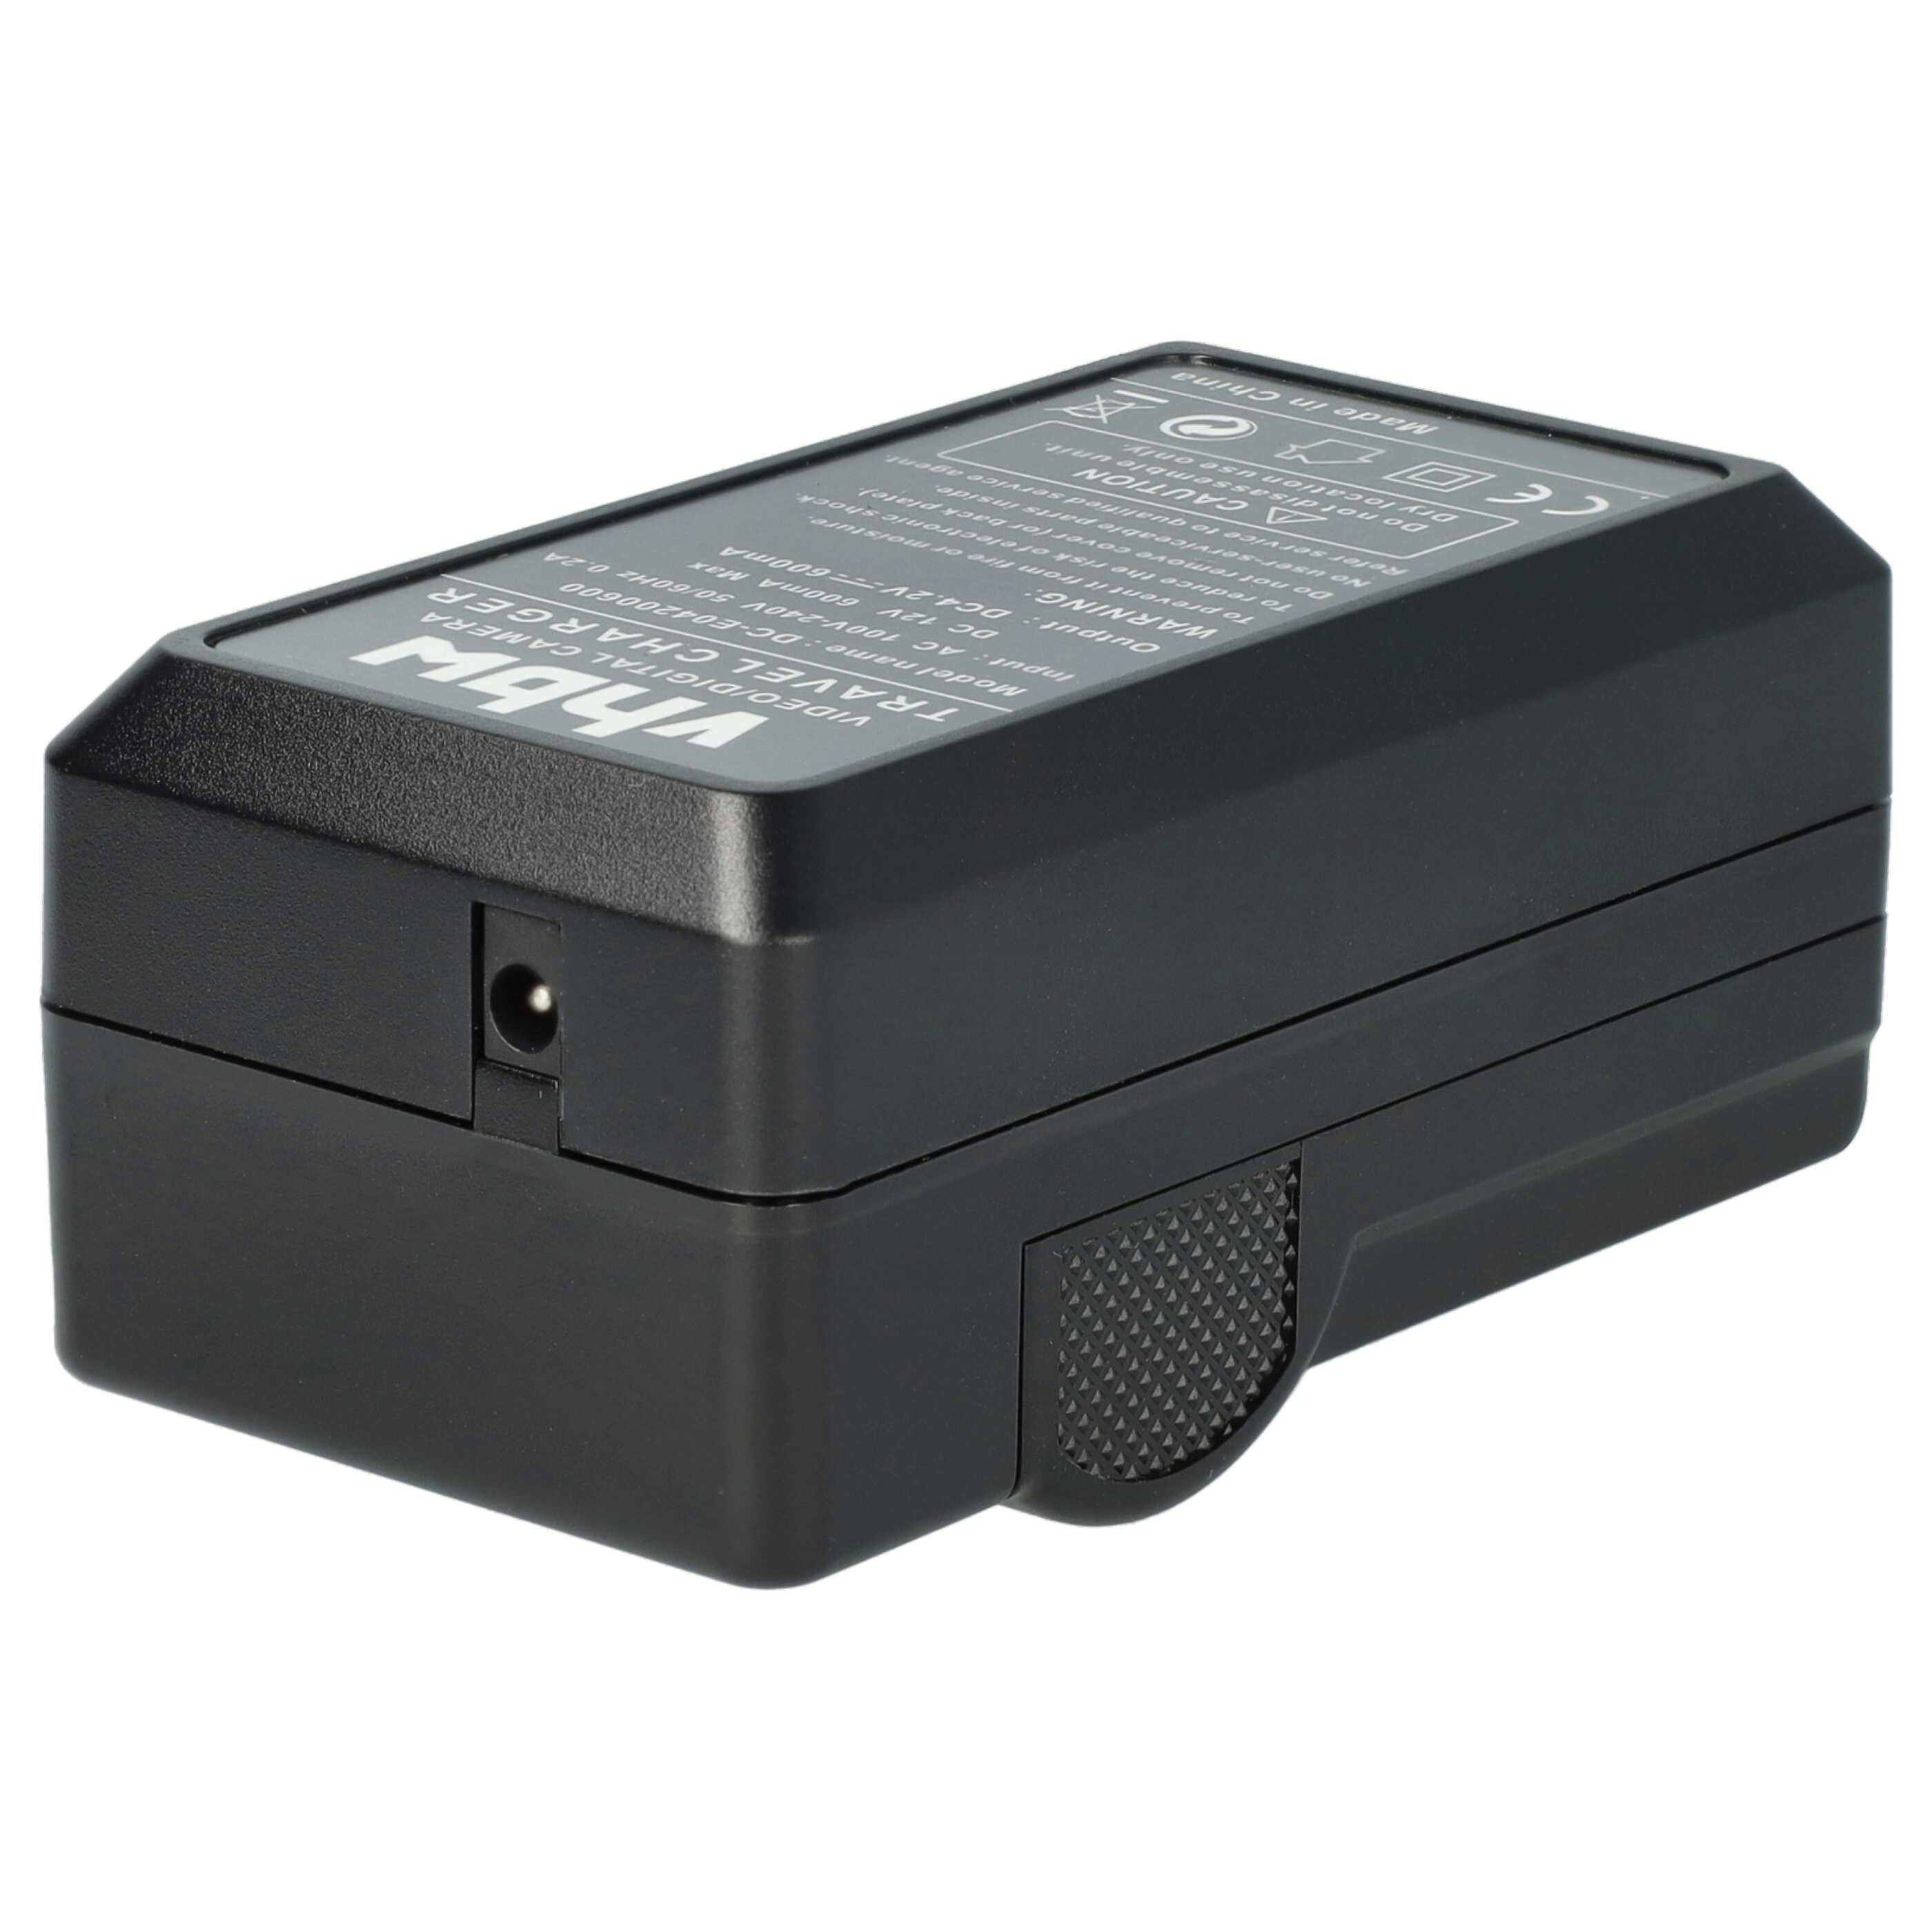 Battery Charger suitable for Everio GZ-V500 Camera etc. - 0.6 A, 4.2 V